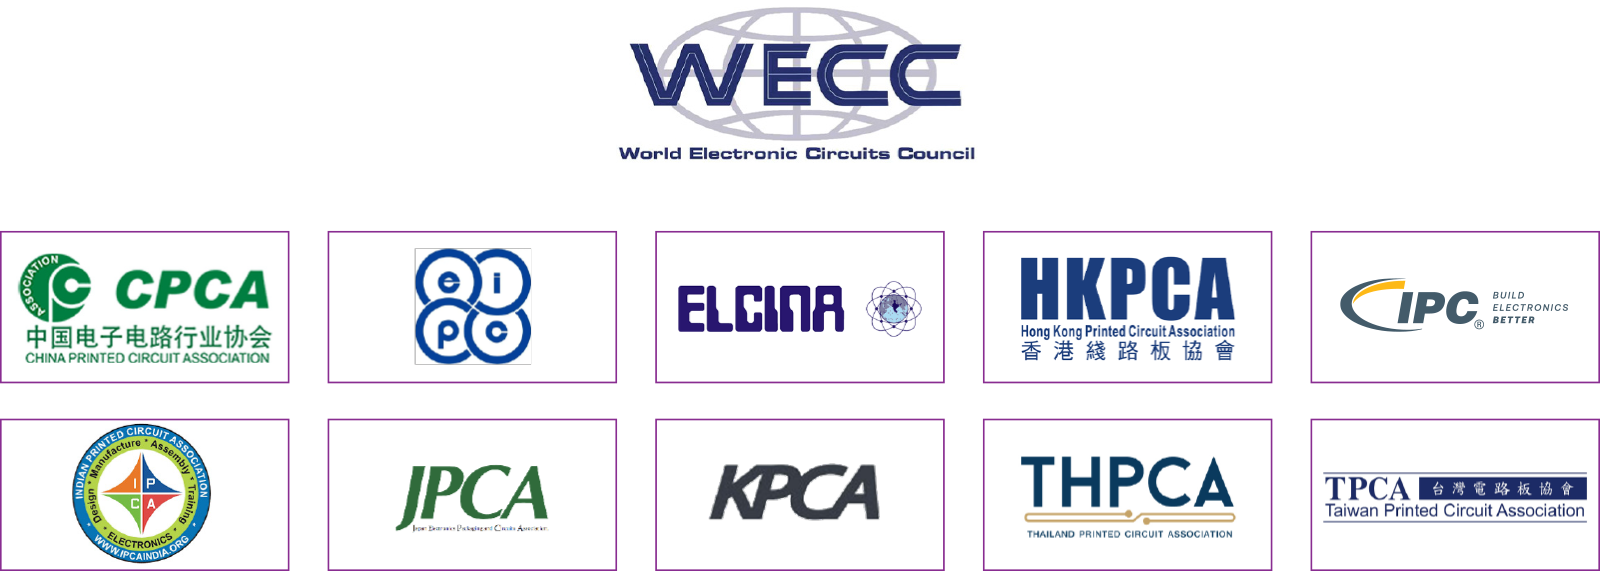 WECC Logos